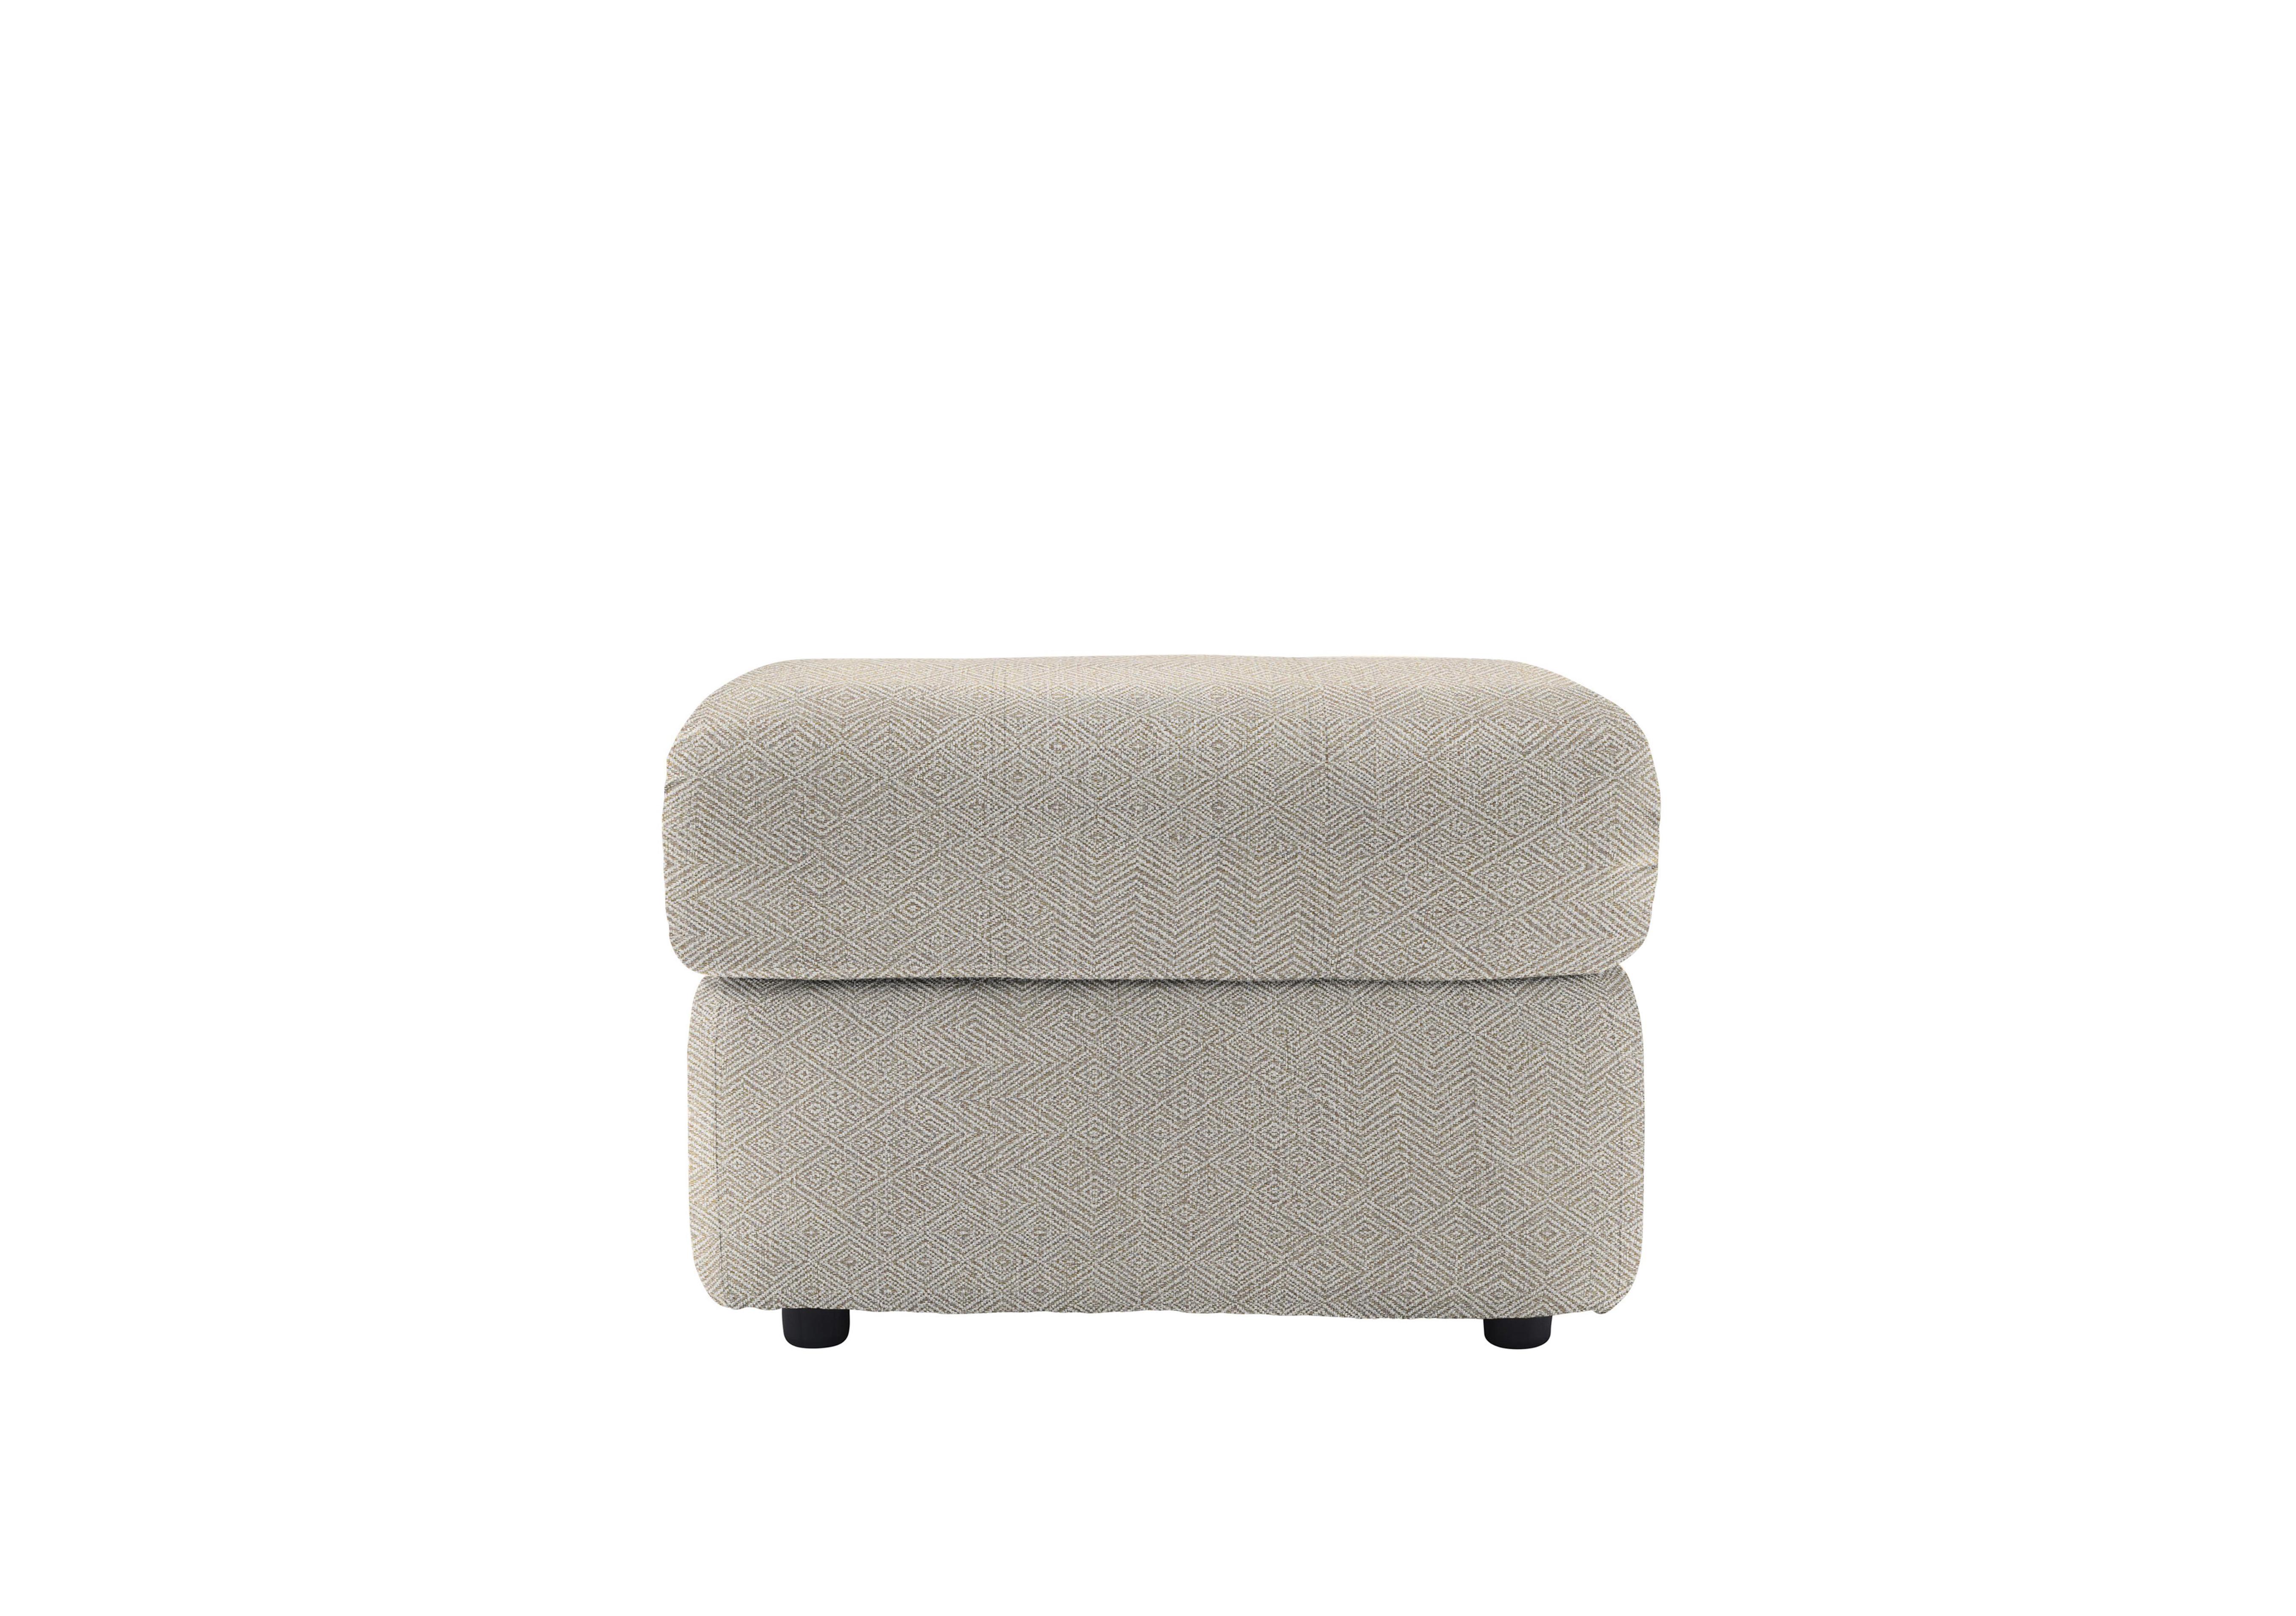 Chloe Fabric Footstool in B011 Nebular Blush on Furniture Village